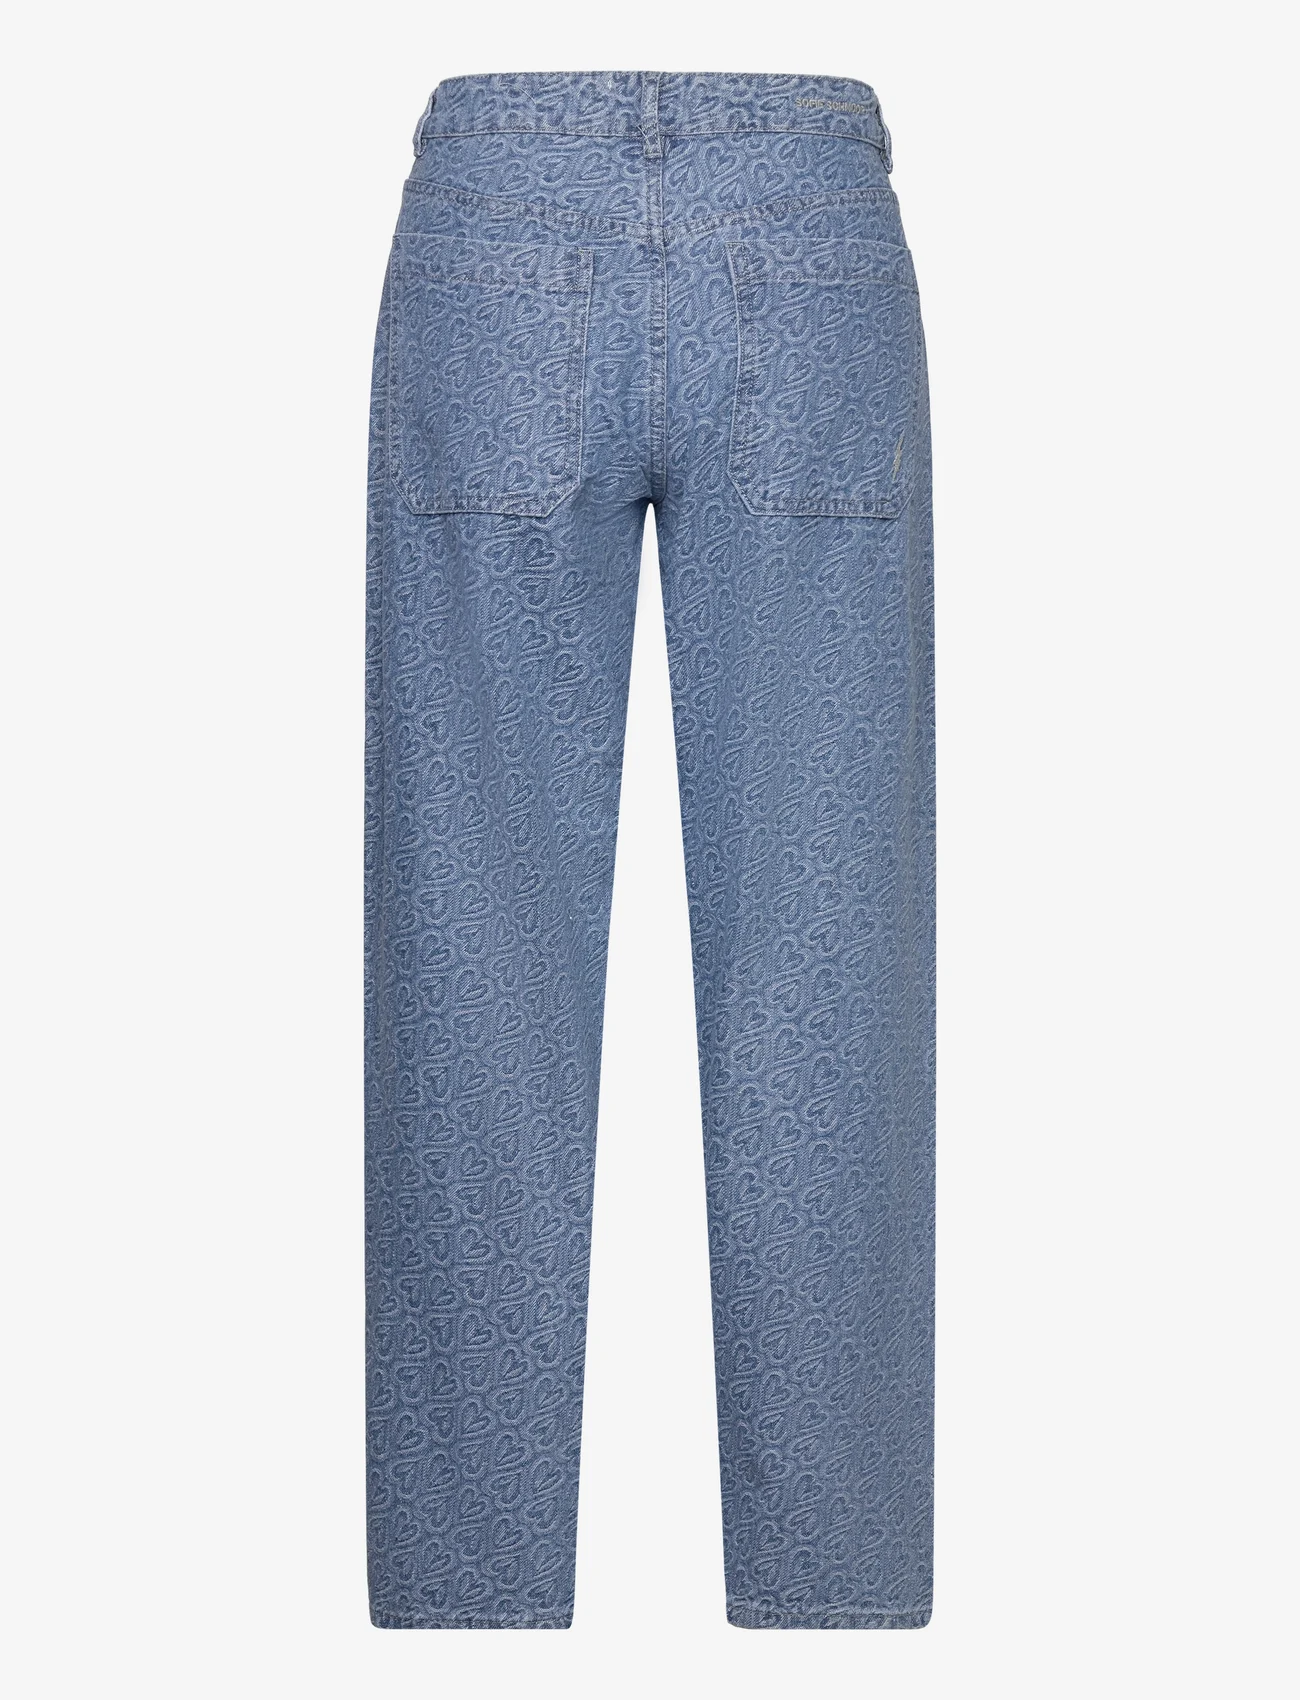 Sofie Schnoor - Trousers - vide jeans - light denim blue - 1